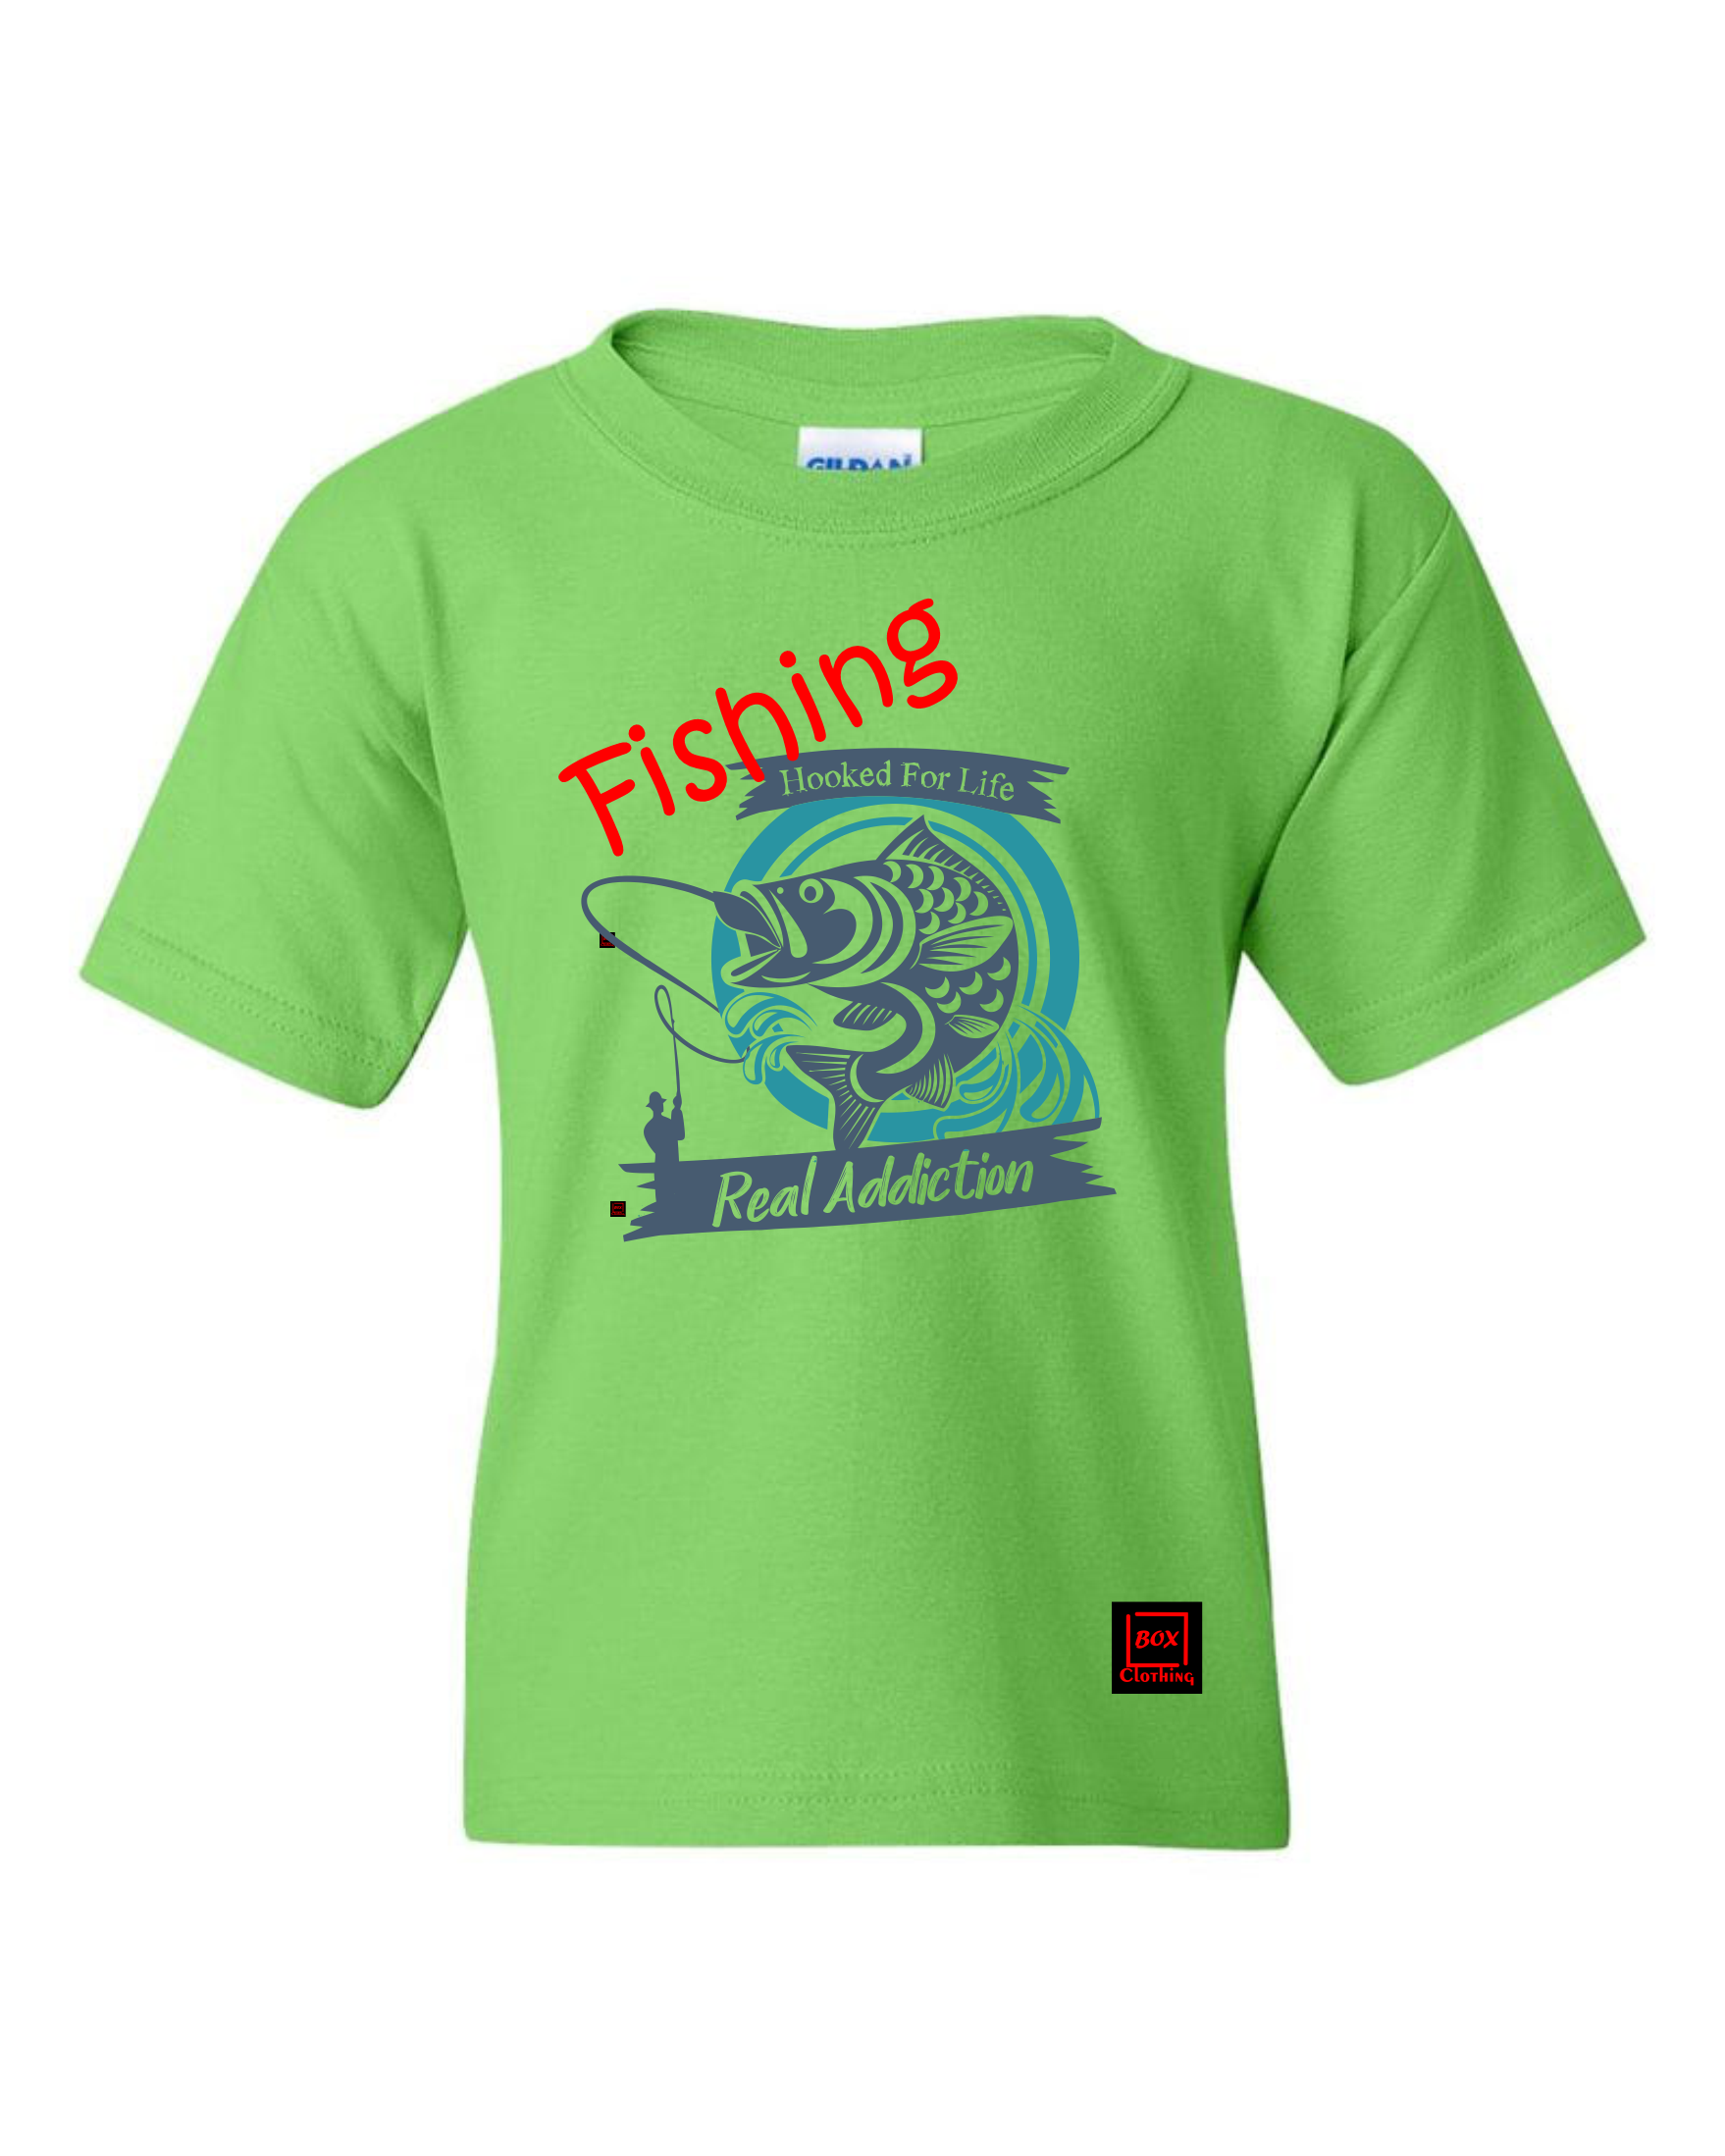 Fishing Addiction – Red Box Clothing Co.